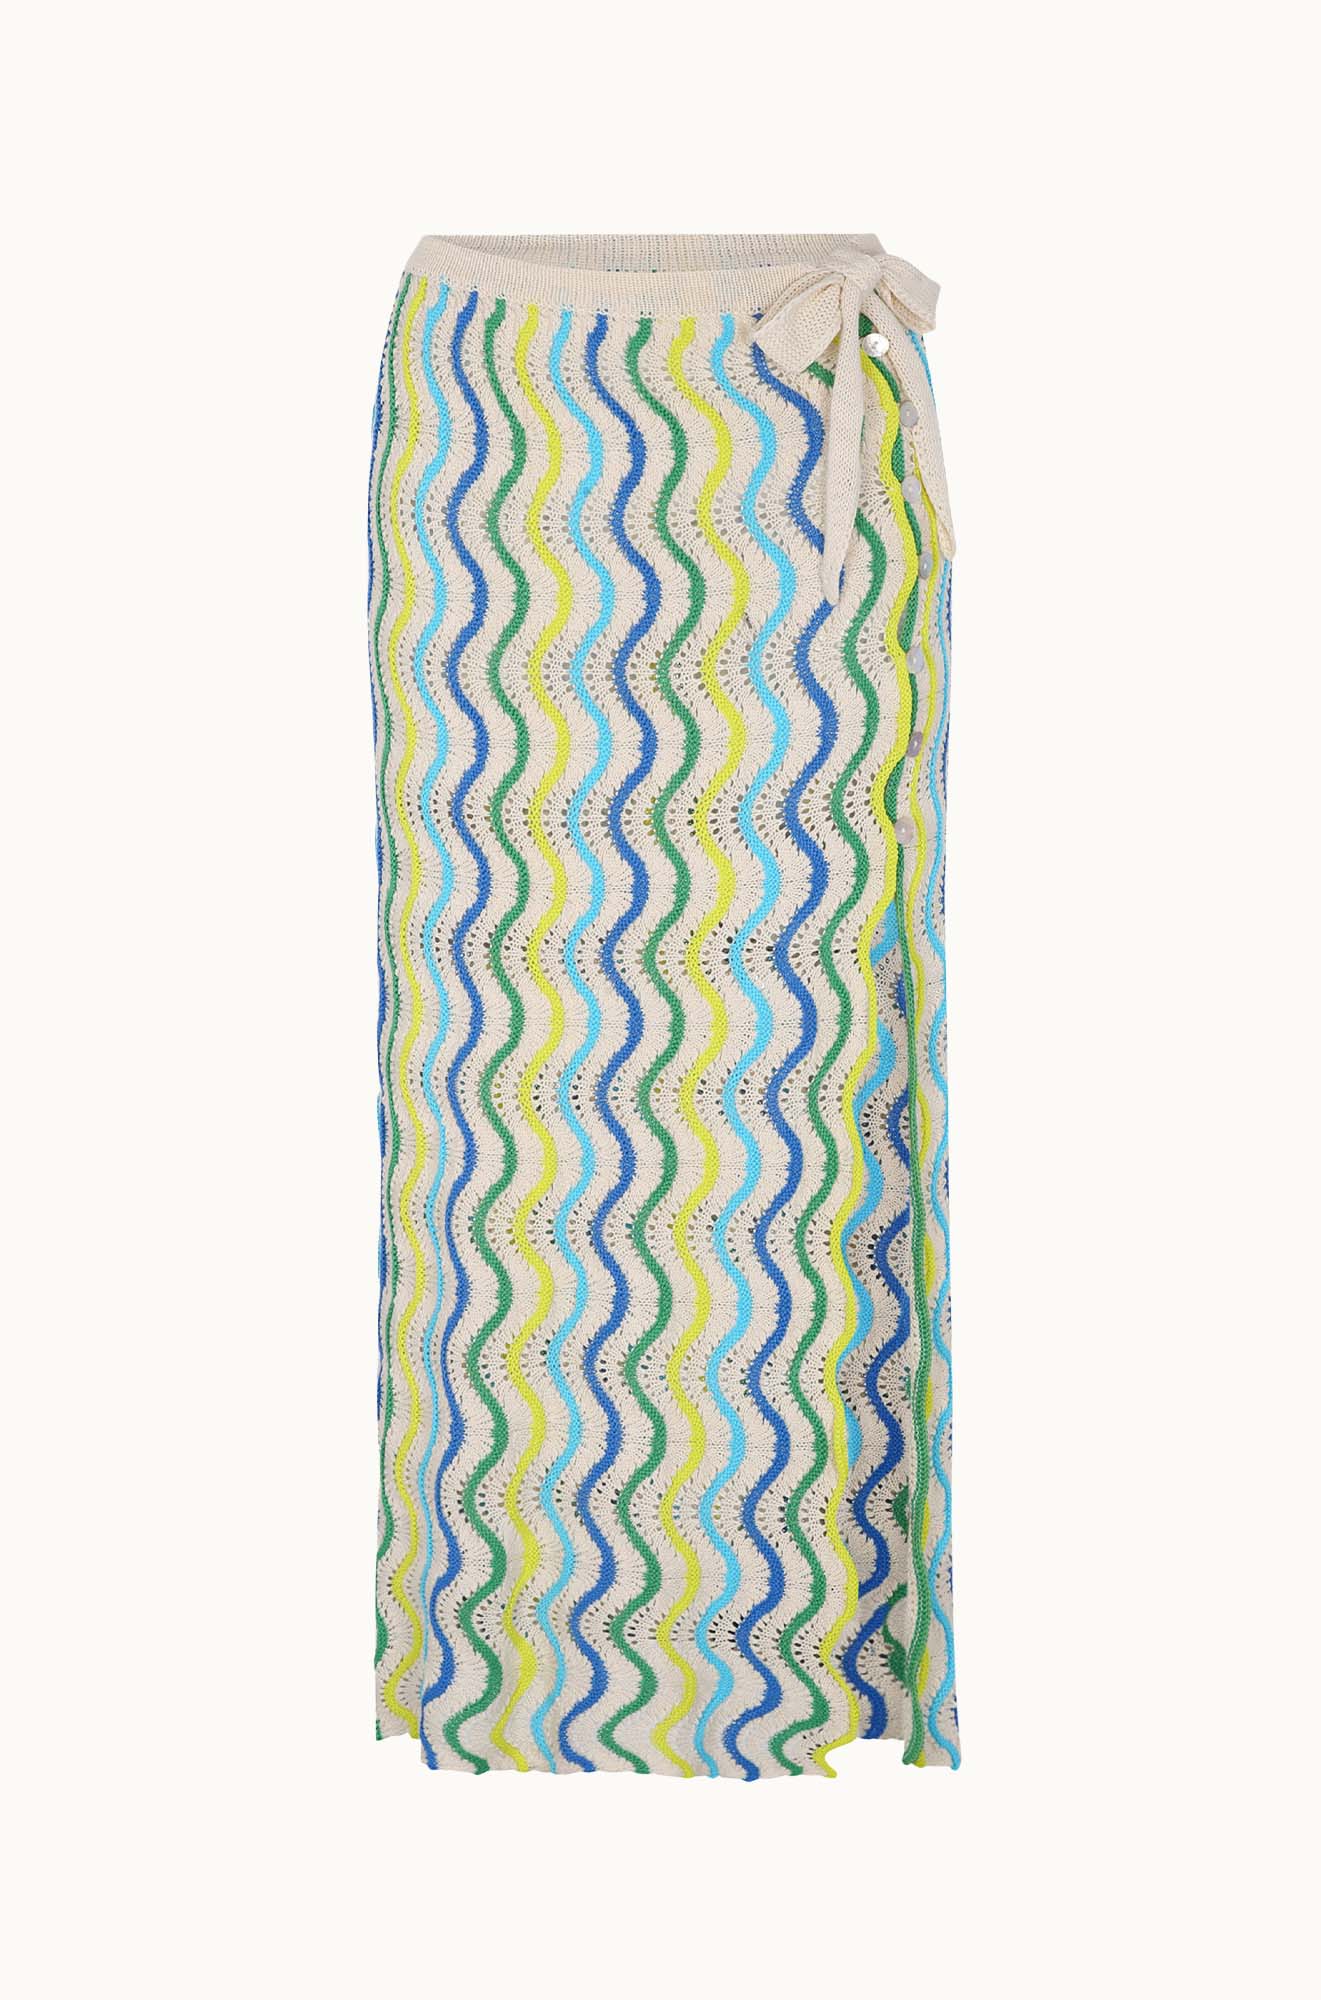 Jade Waves Crochet Skirt